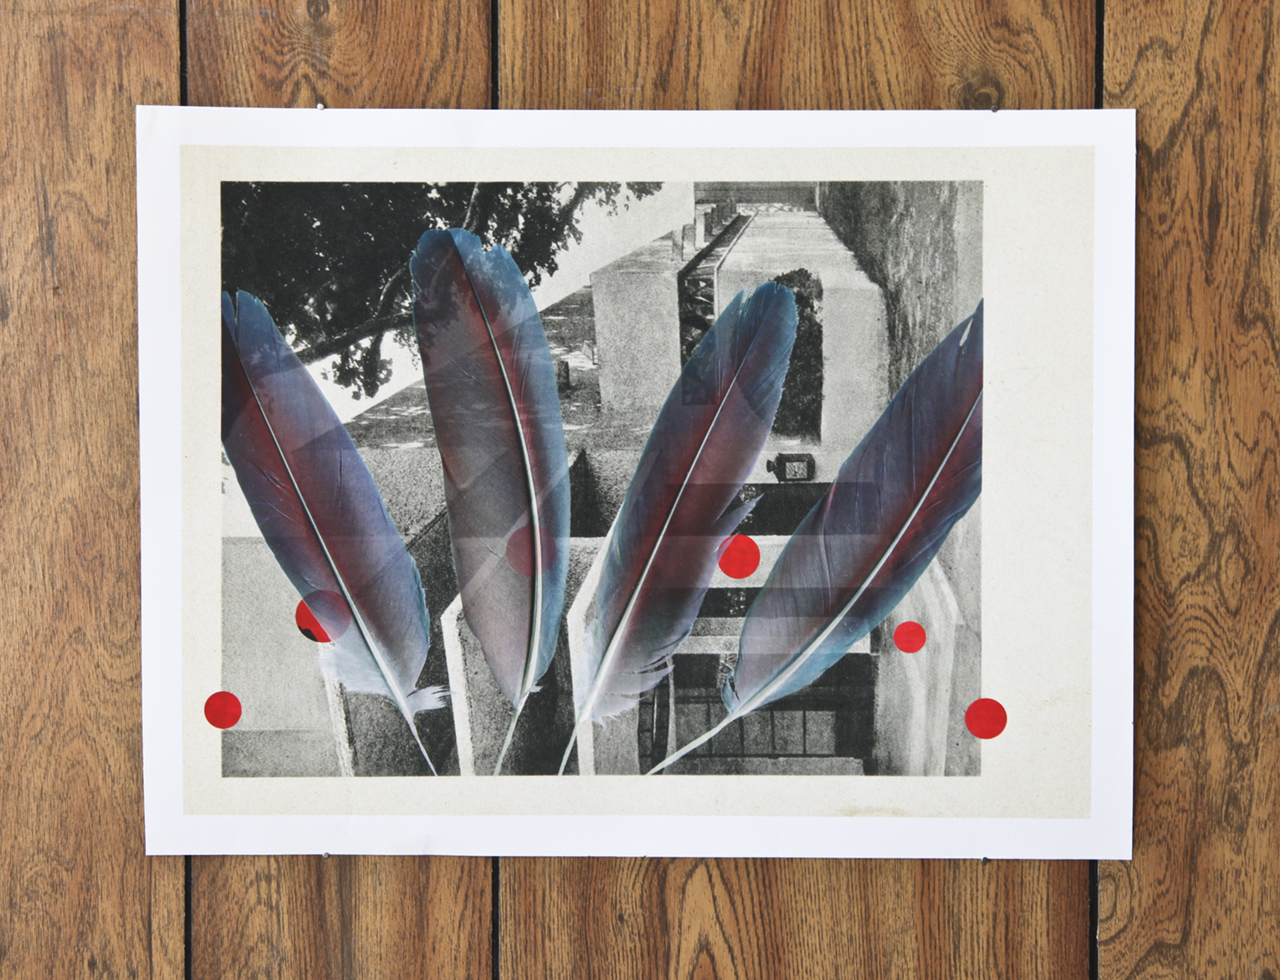 Sari Carel “Flight Song”, Archival Print, 12x16 inches, 2015.  